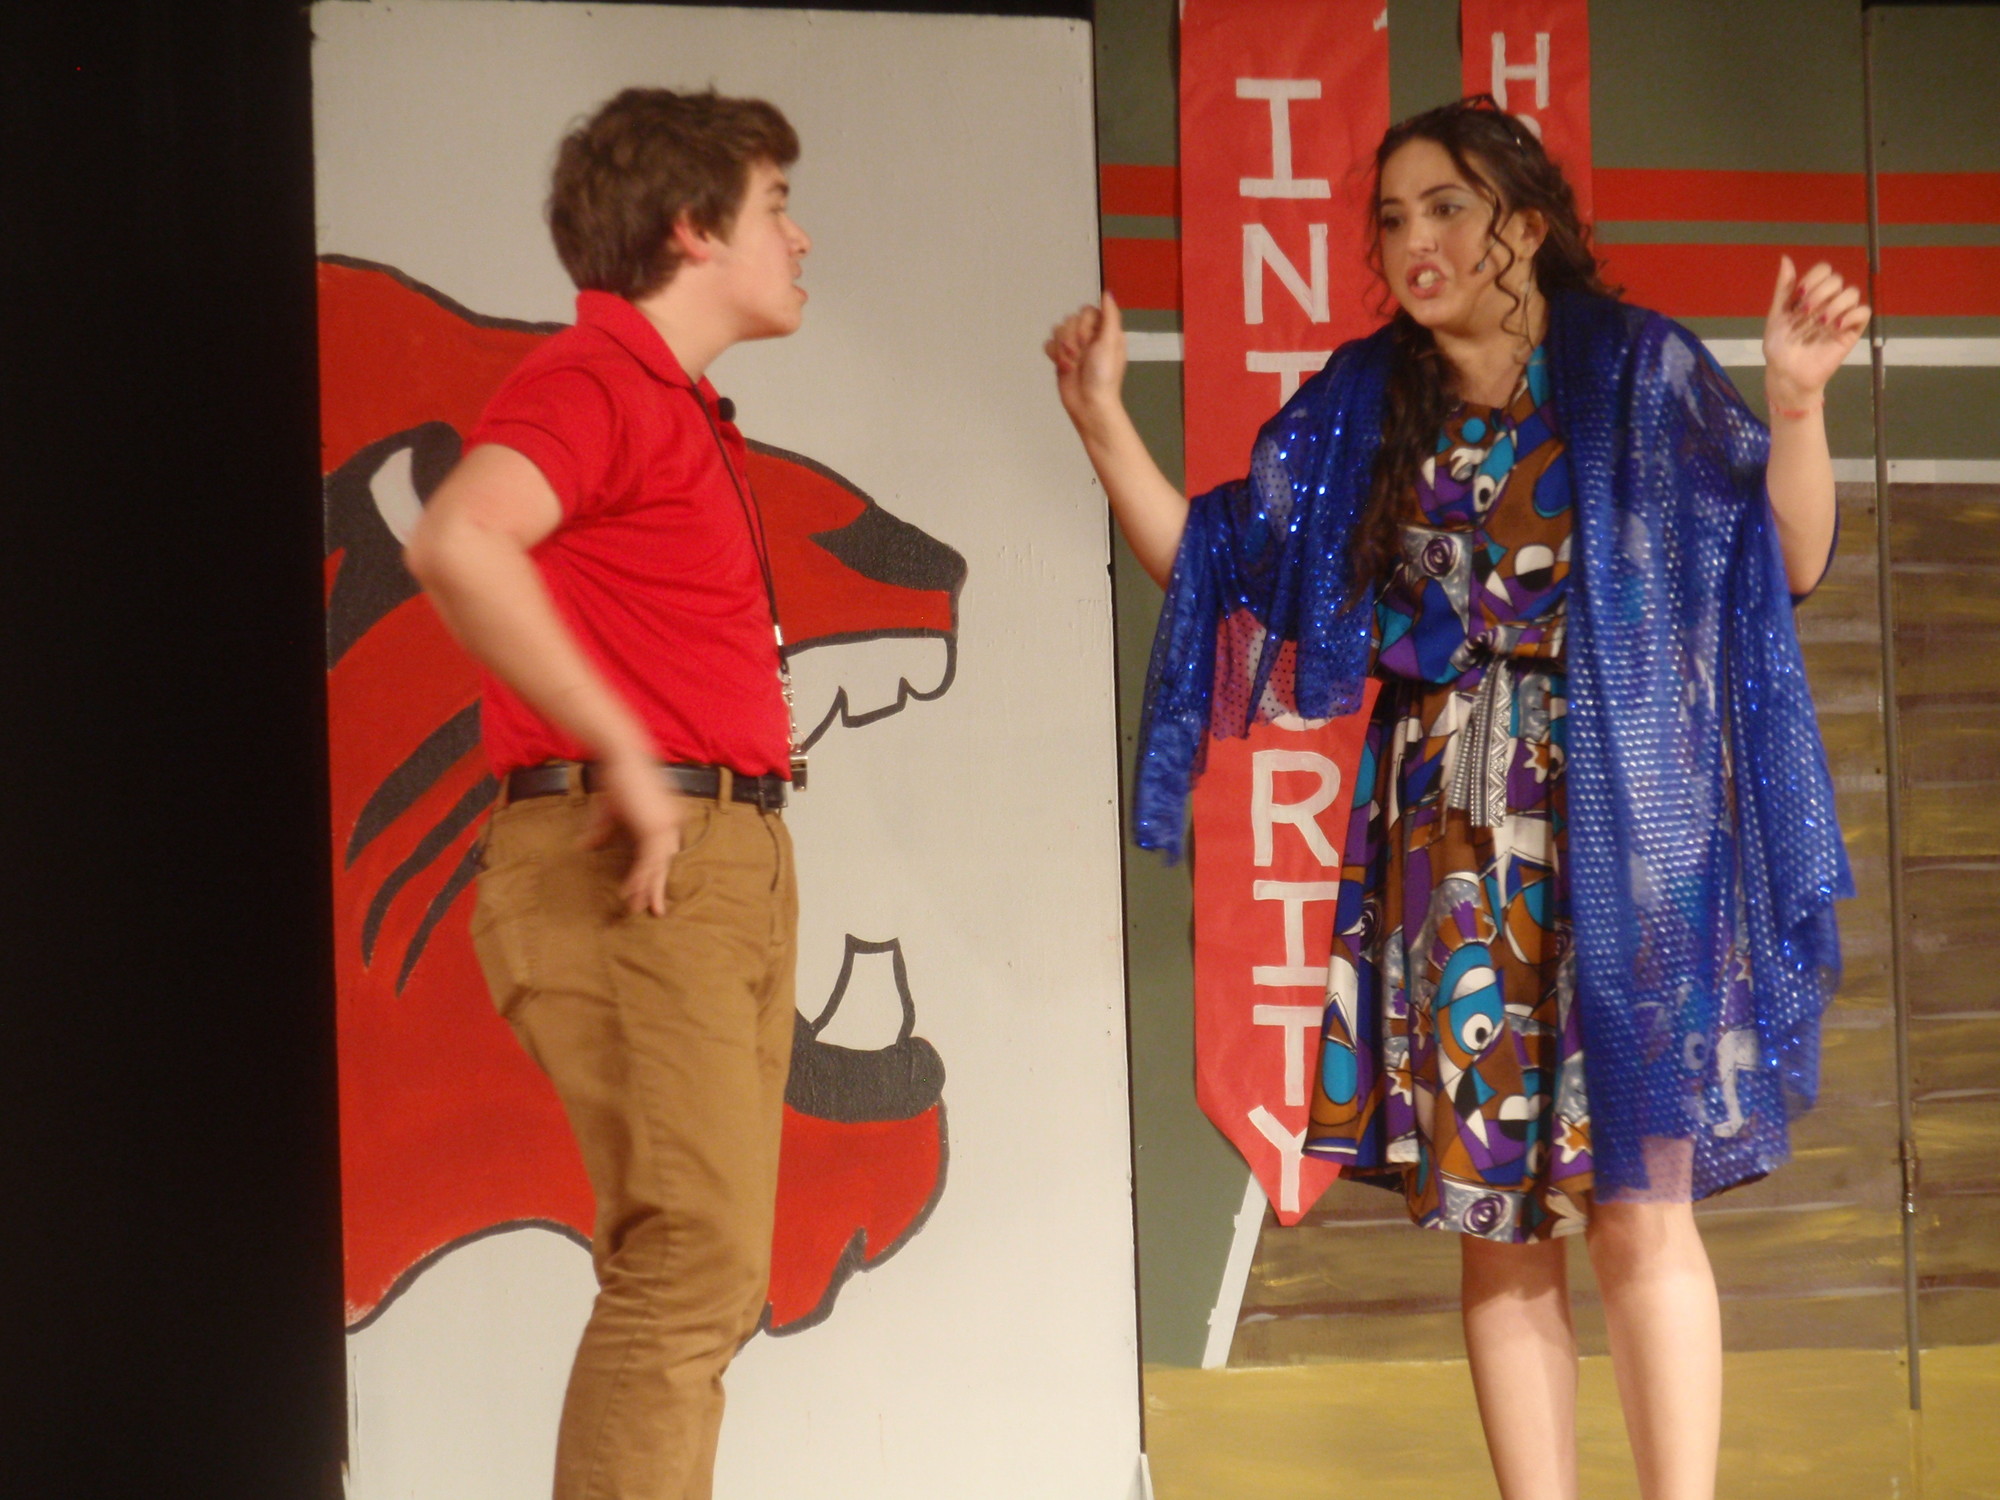 Student thespians Vasilli Boletsis, left, and Alyssa Lombardi performed a scene during North High School’s “High School Musical.”